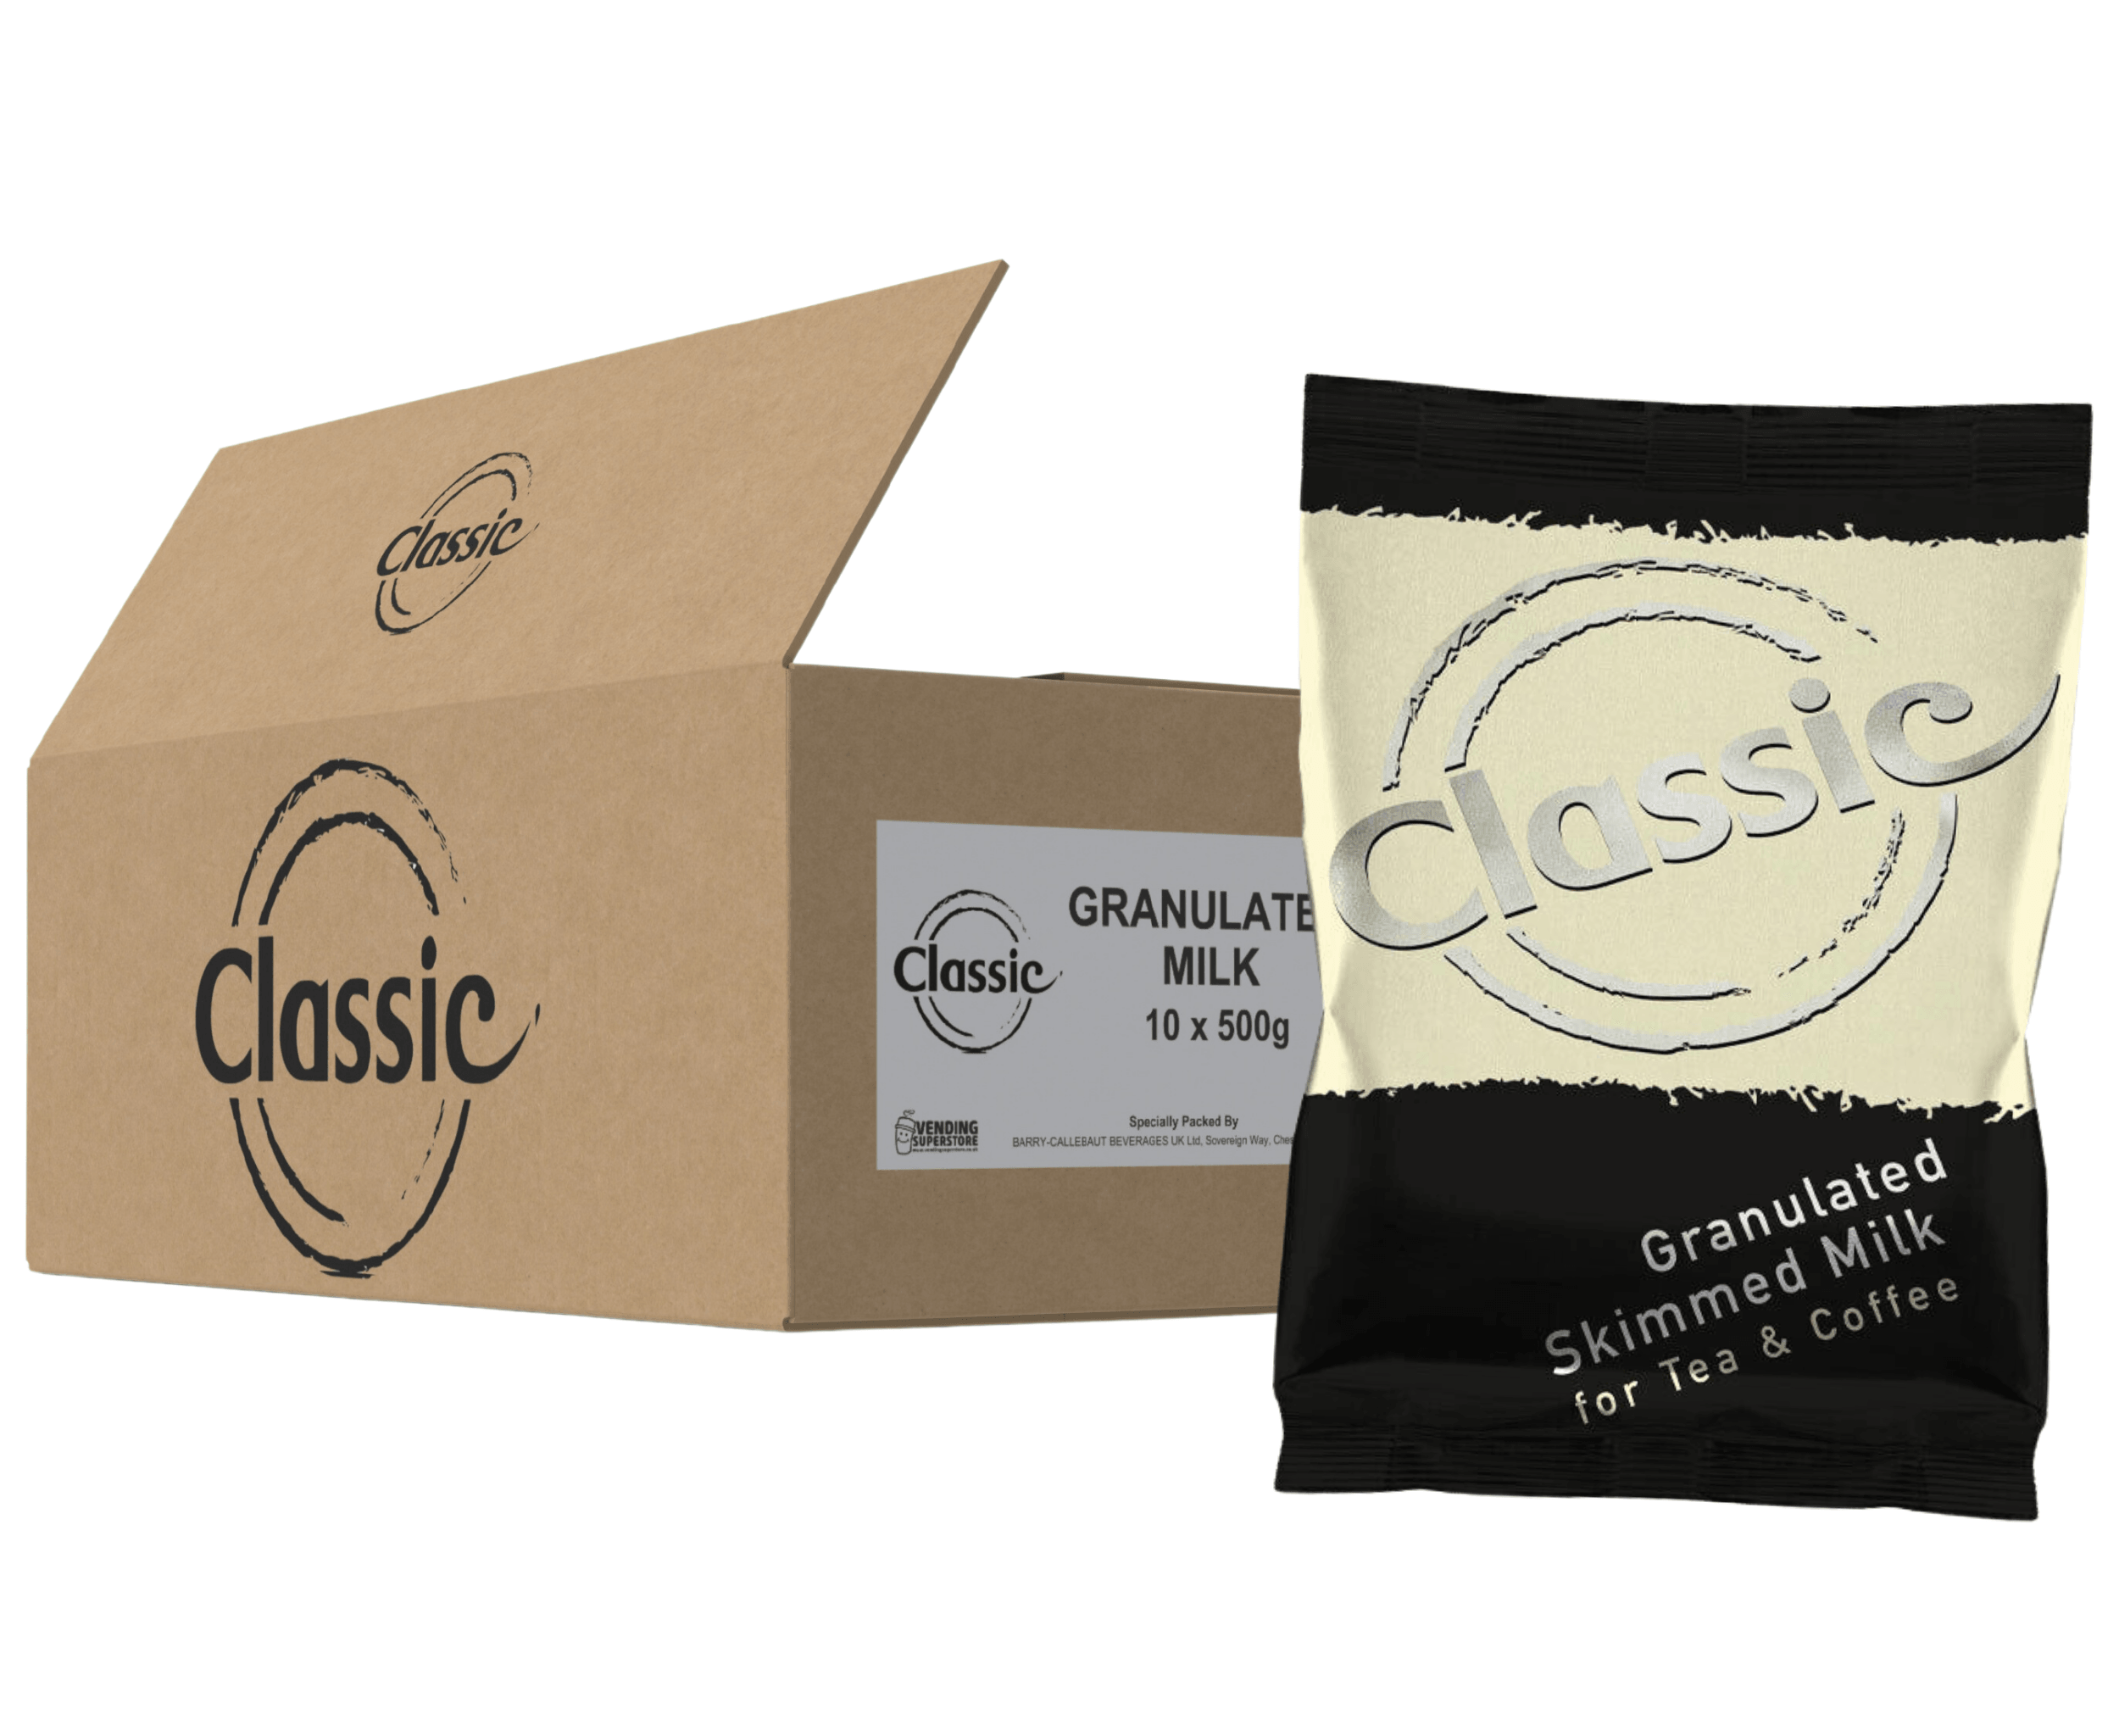 Classic Granulated Skimmed Milk - Gold (Milfresh Gold Alternative, Large Granulated) - 500g Bags or Full 10 x 500g Case - Vending Superstore